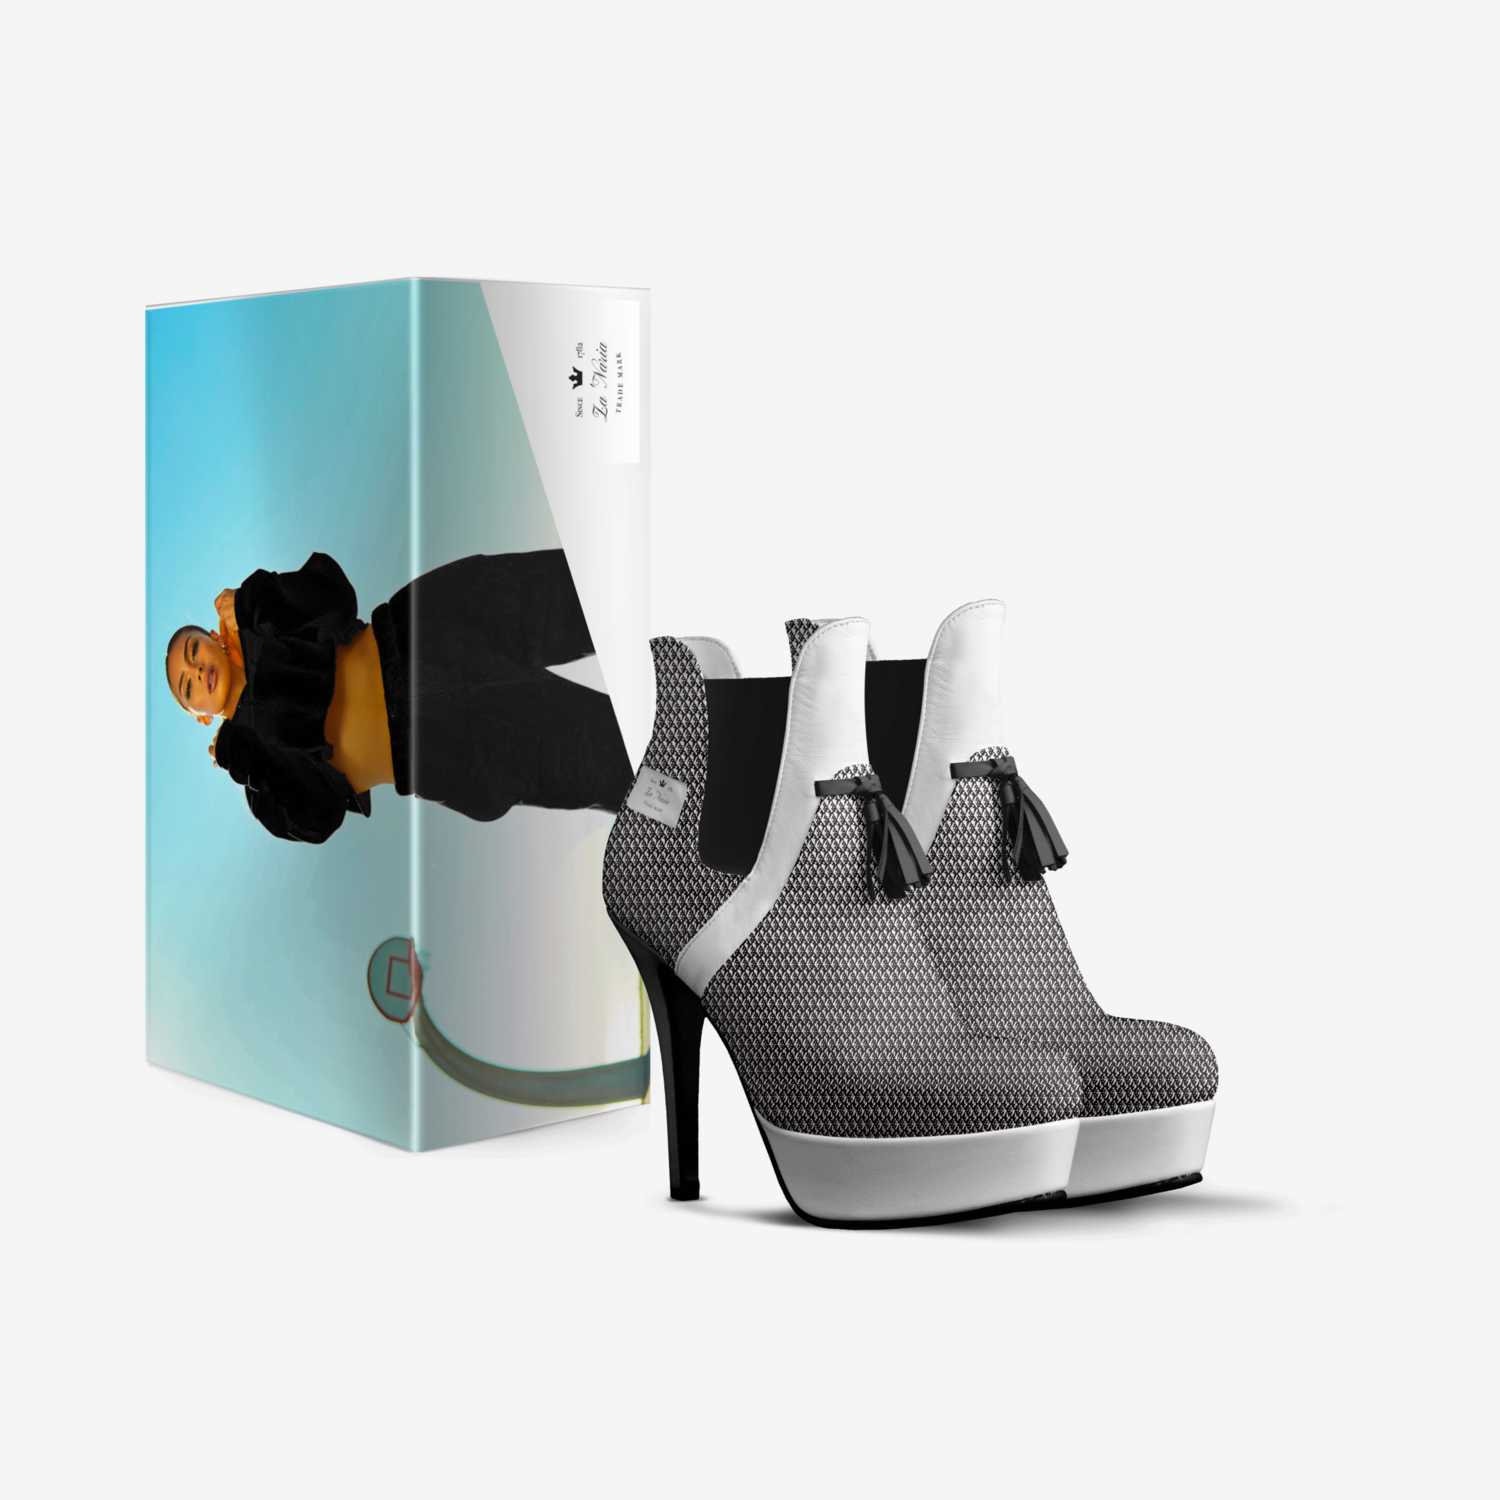 Za'Naria custom made in Italy shoes by Sabrina Stubbins | Box view